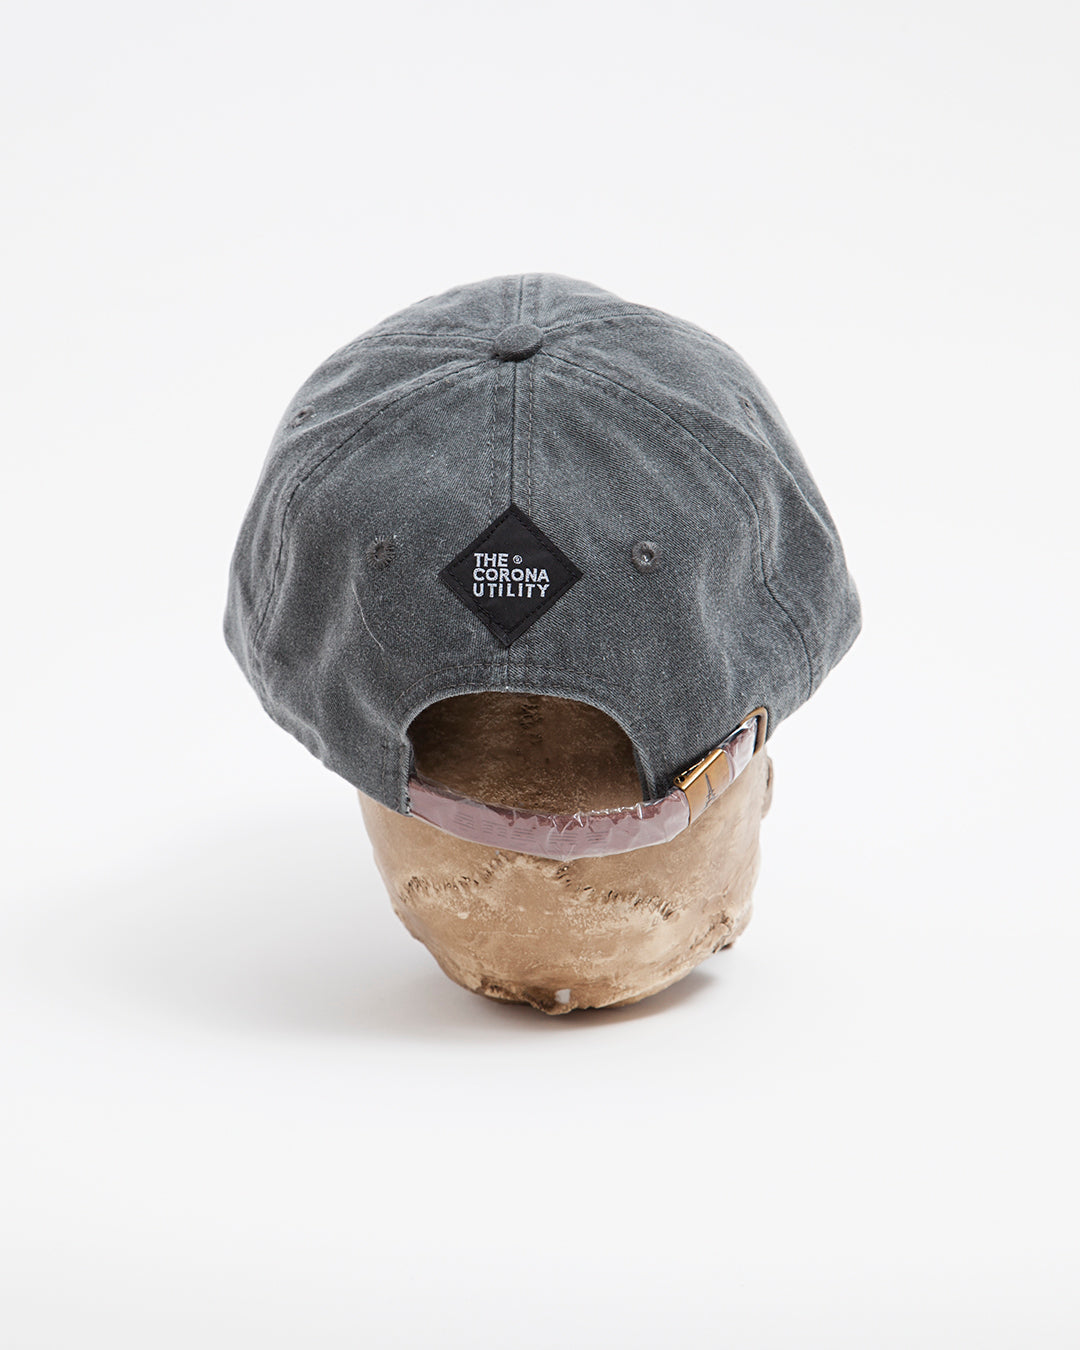 THE CORONA UTILITY・CORONA LOGO EMBROIDERY CAP / Grey × Black Embroidery